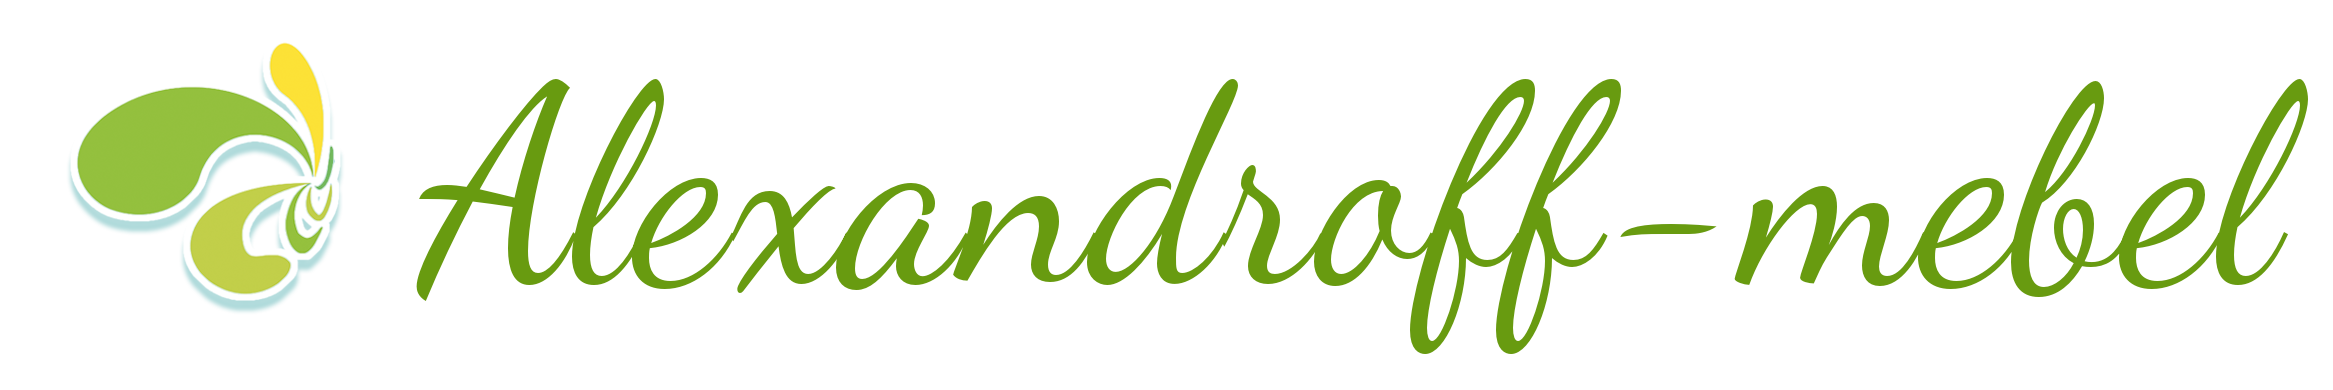 Alexsandroff-mebel Логотип(logo)